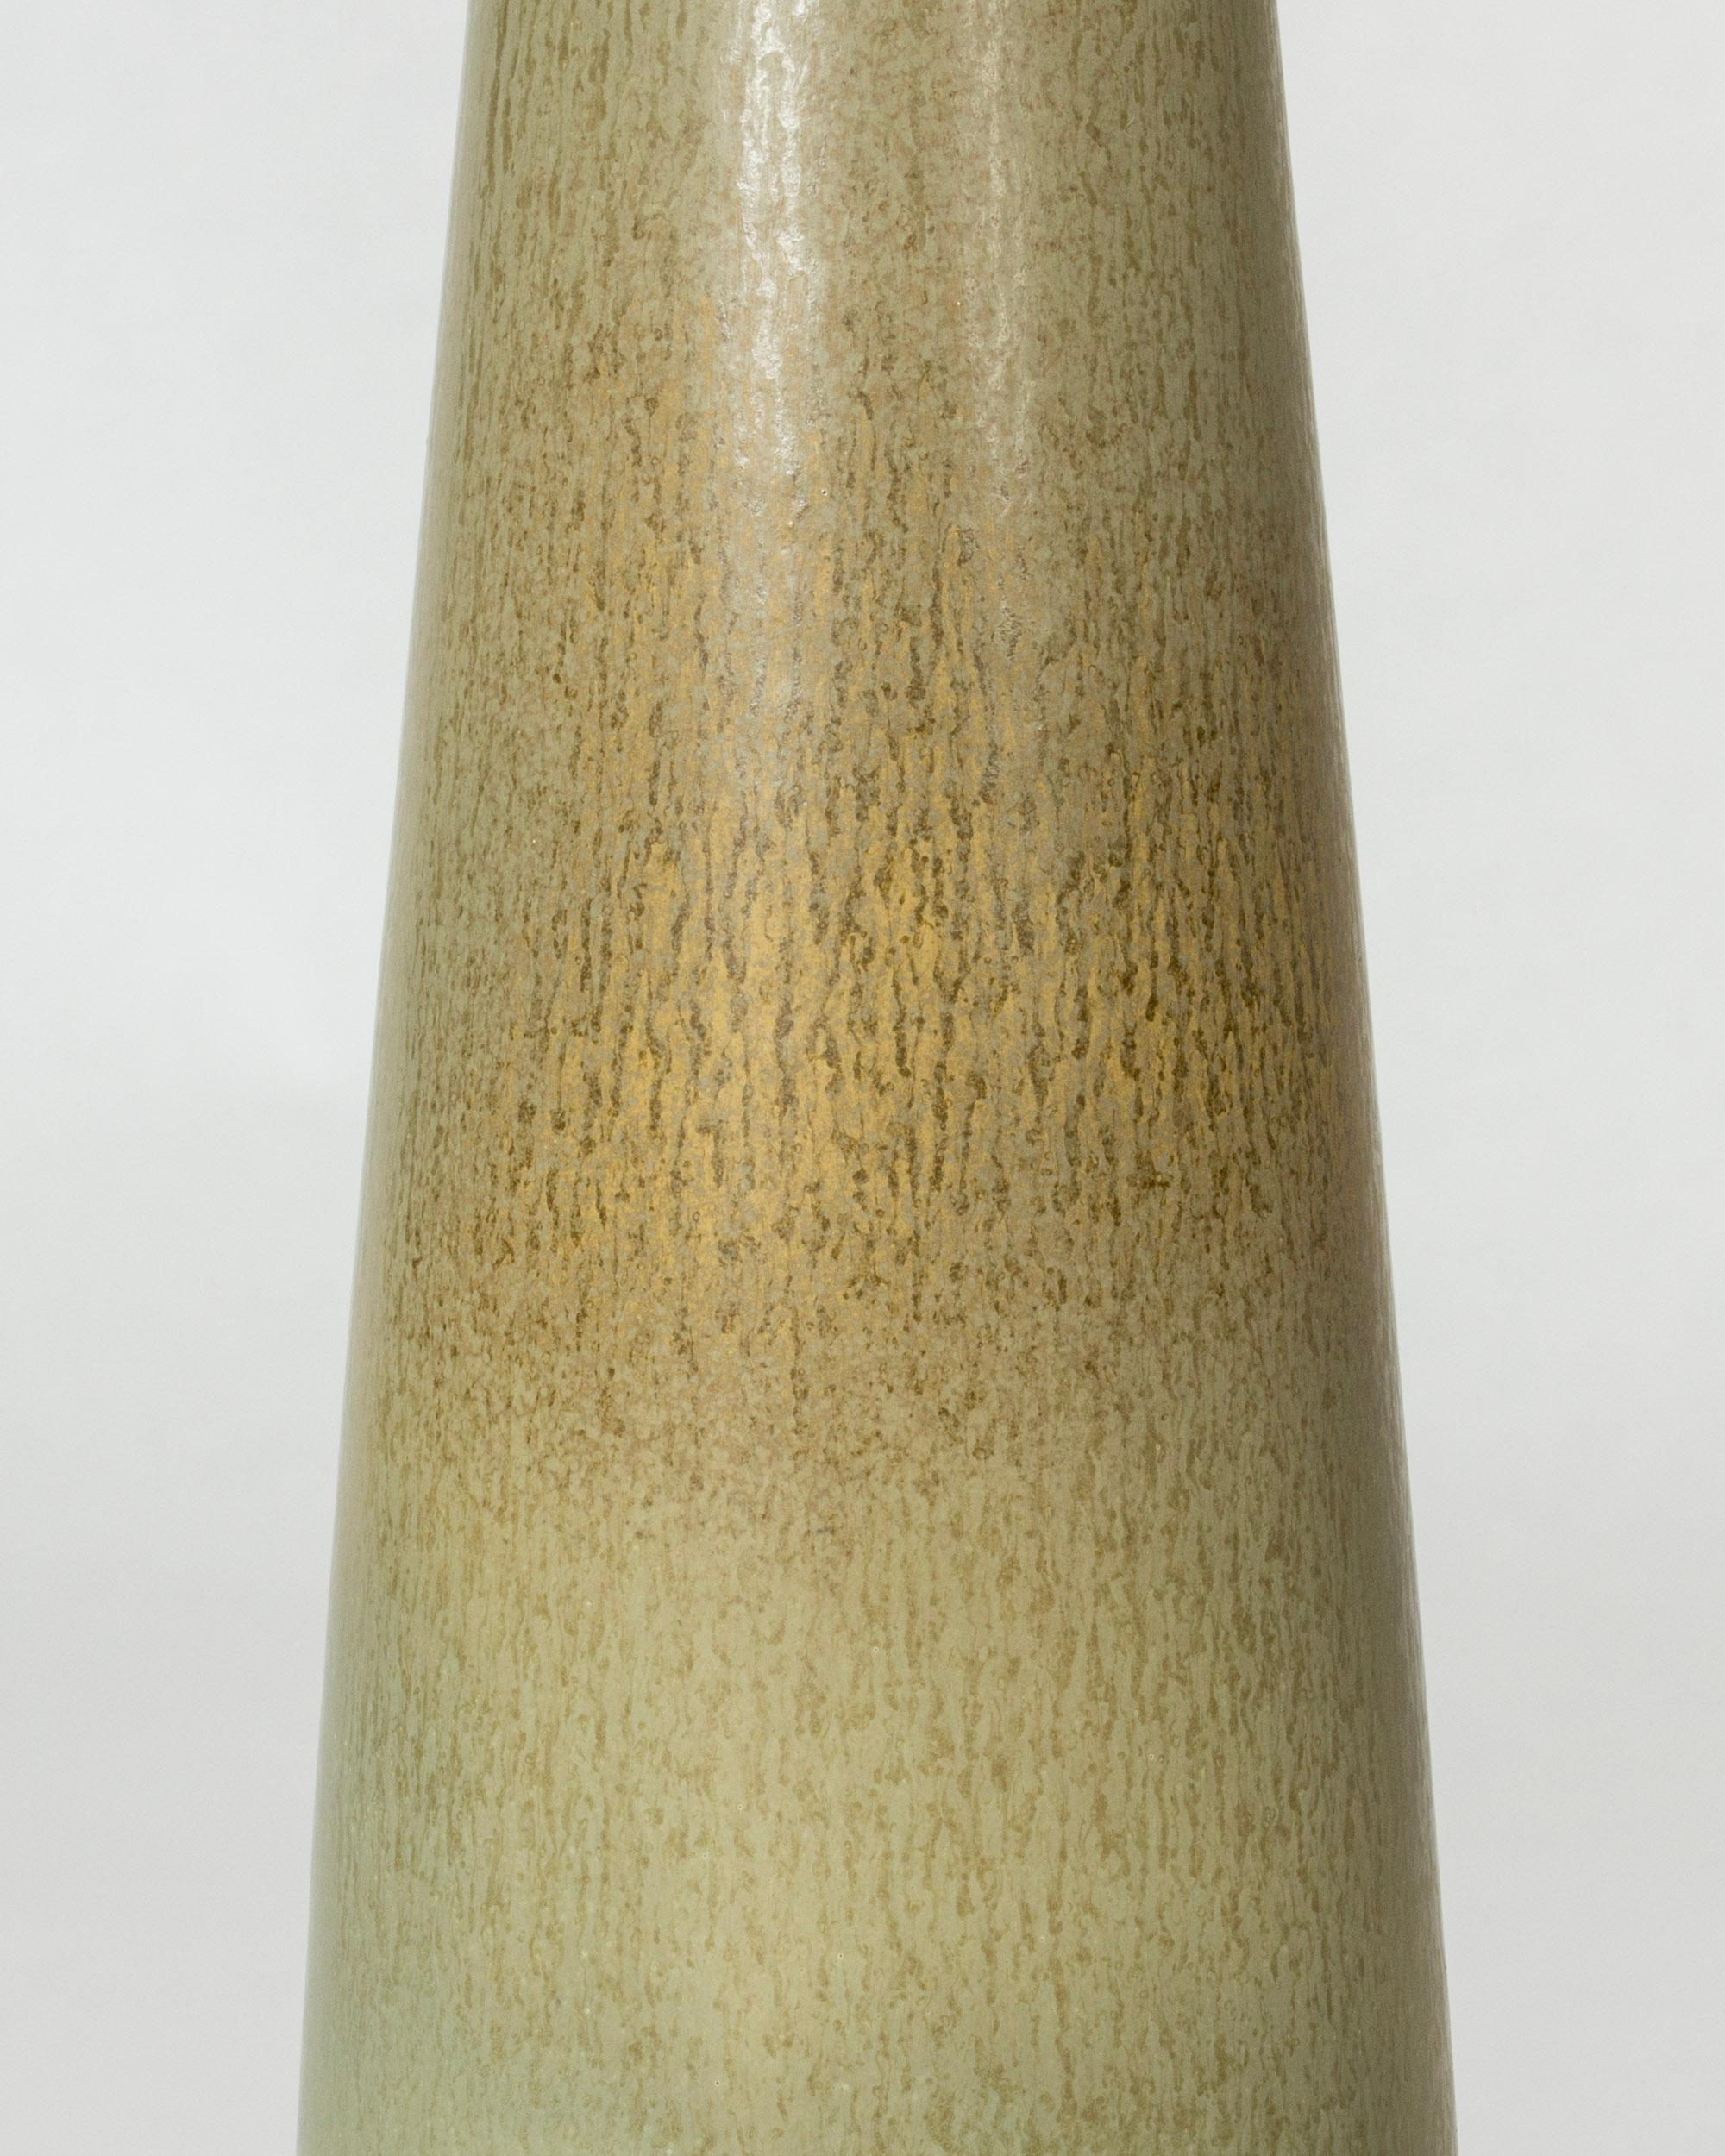 Swedish Midcentury Stoneware Vase by Berndt Friberg, Gustavsberg, Sweden, 1950s For Sale